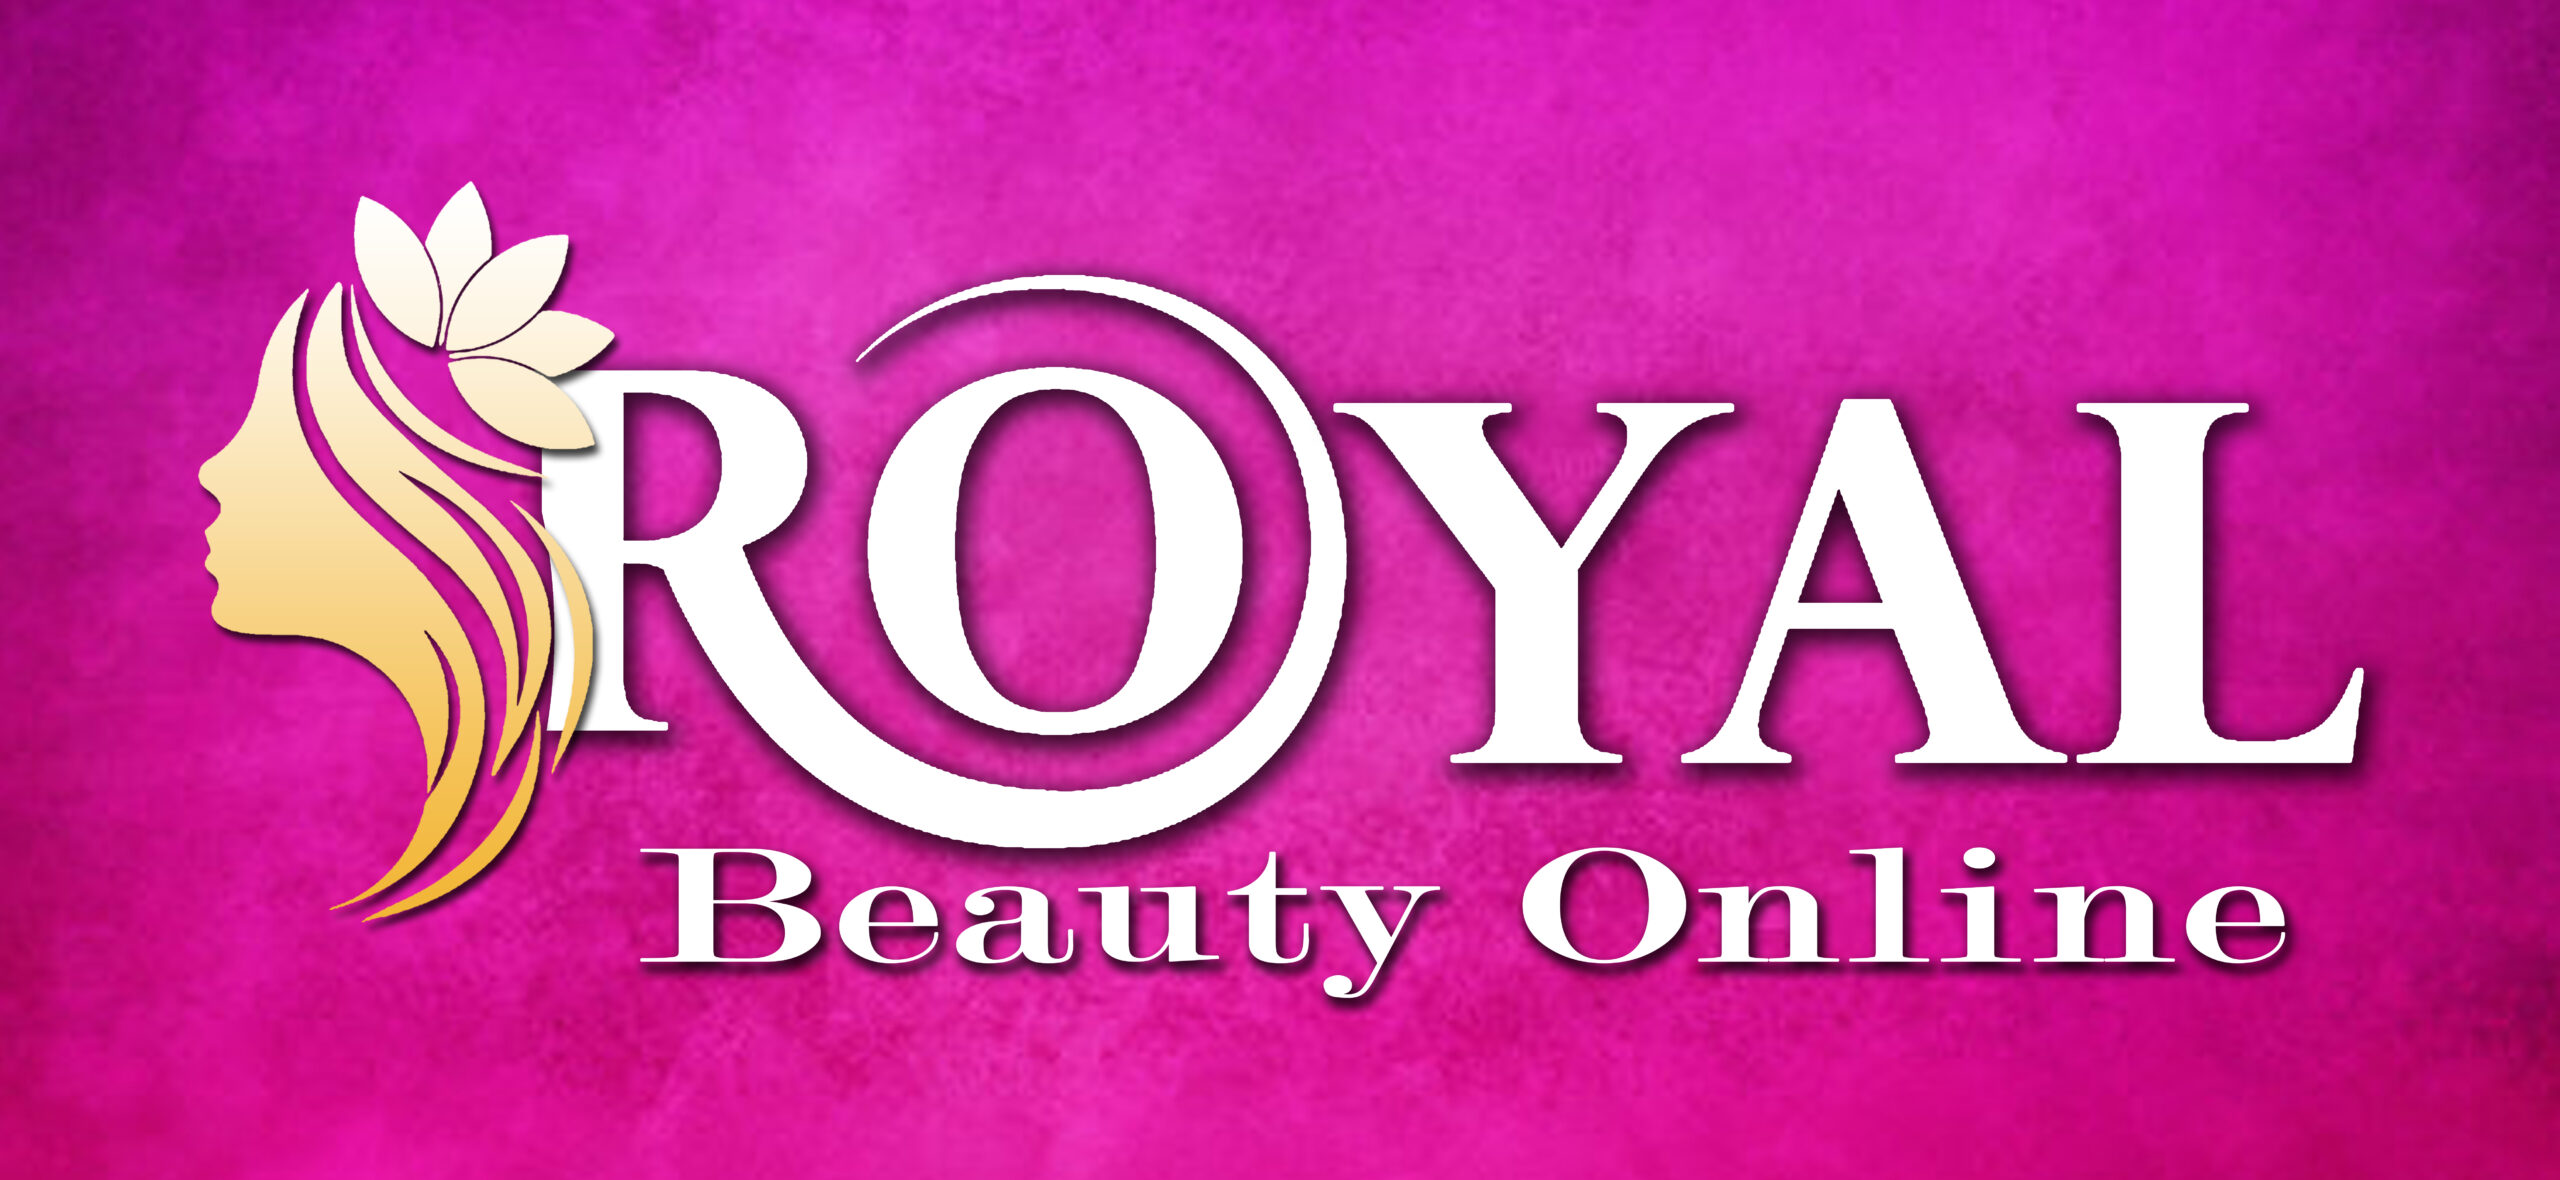 Royal Beauty Online